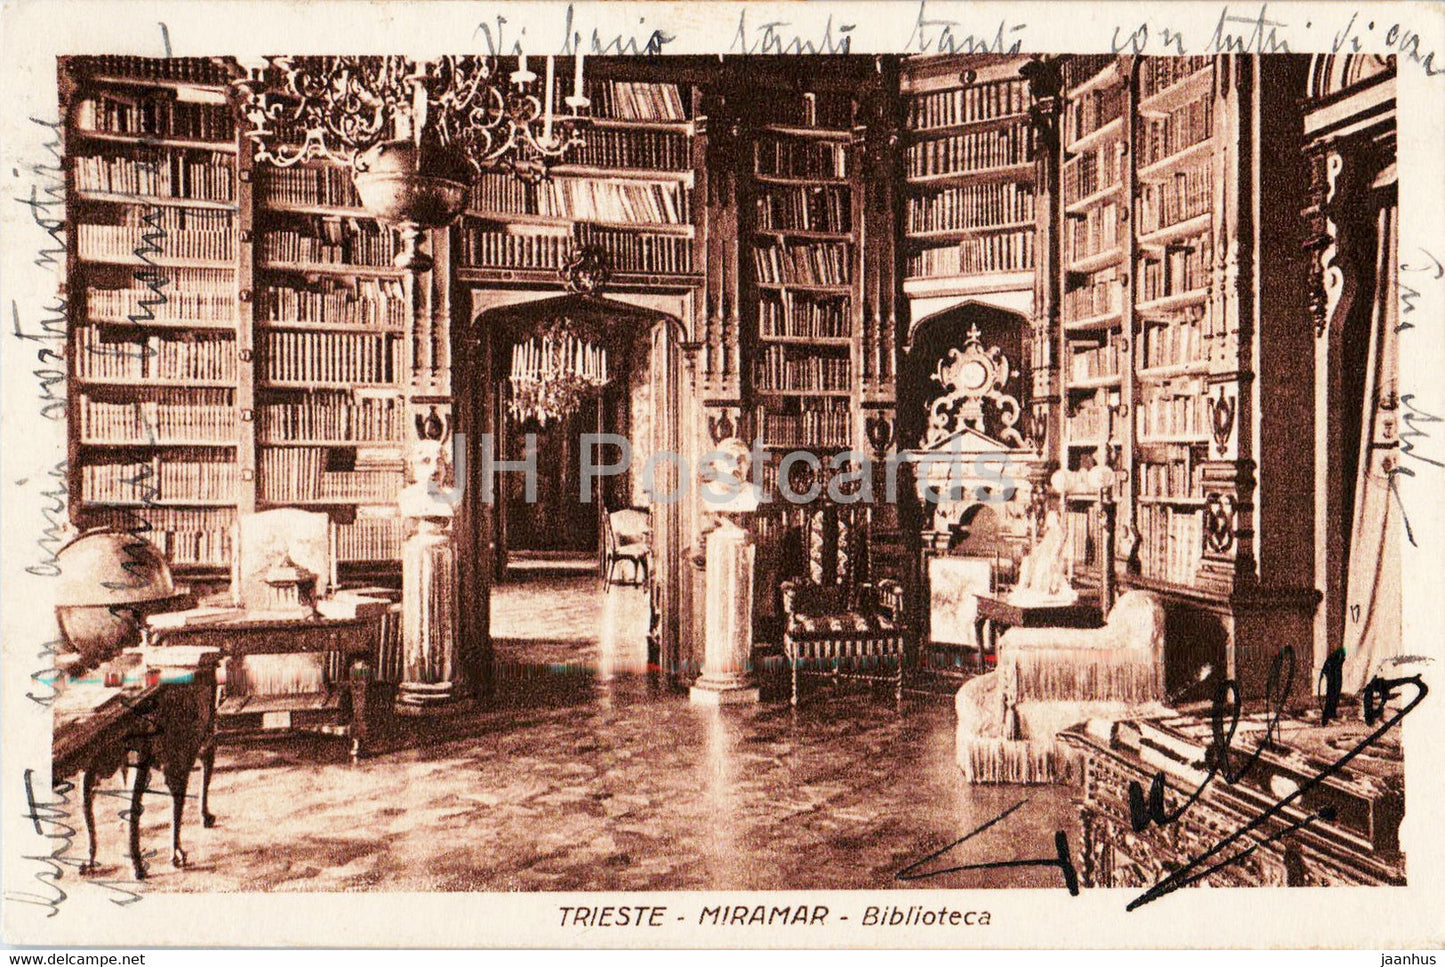 Trieste - Miramar - Biblioteca - library - old postcard - 1931 - Italy - used - JH Postcards